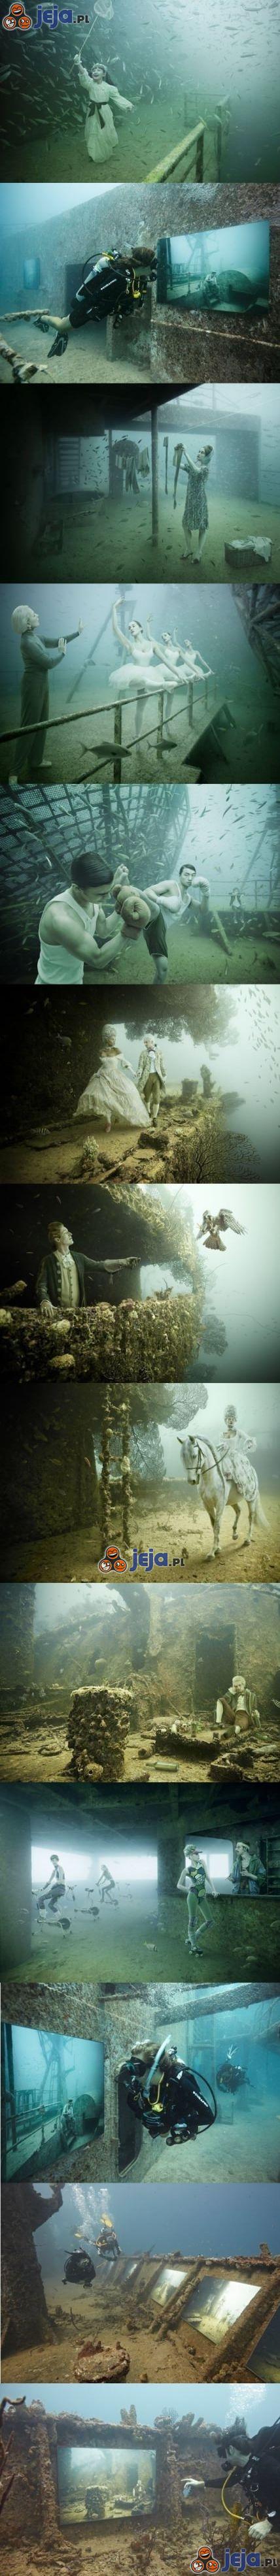 Podwodne muzeum